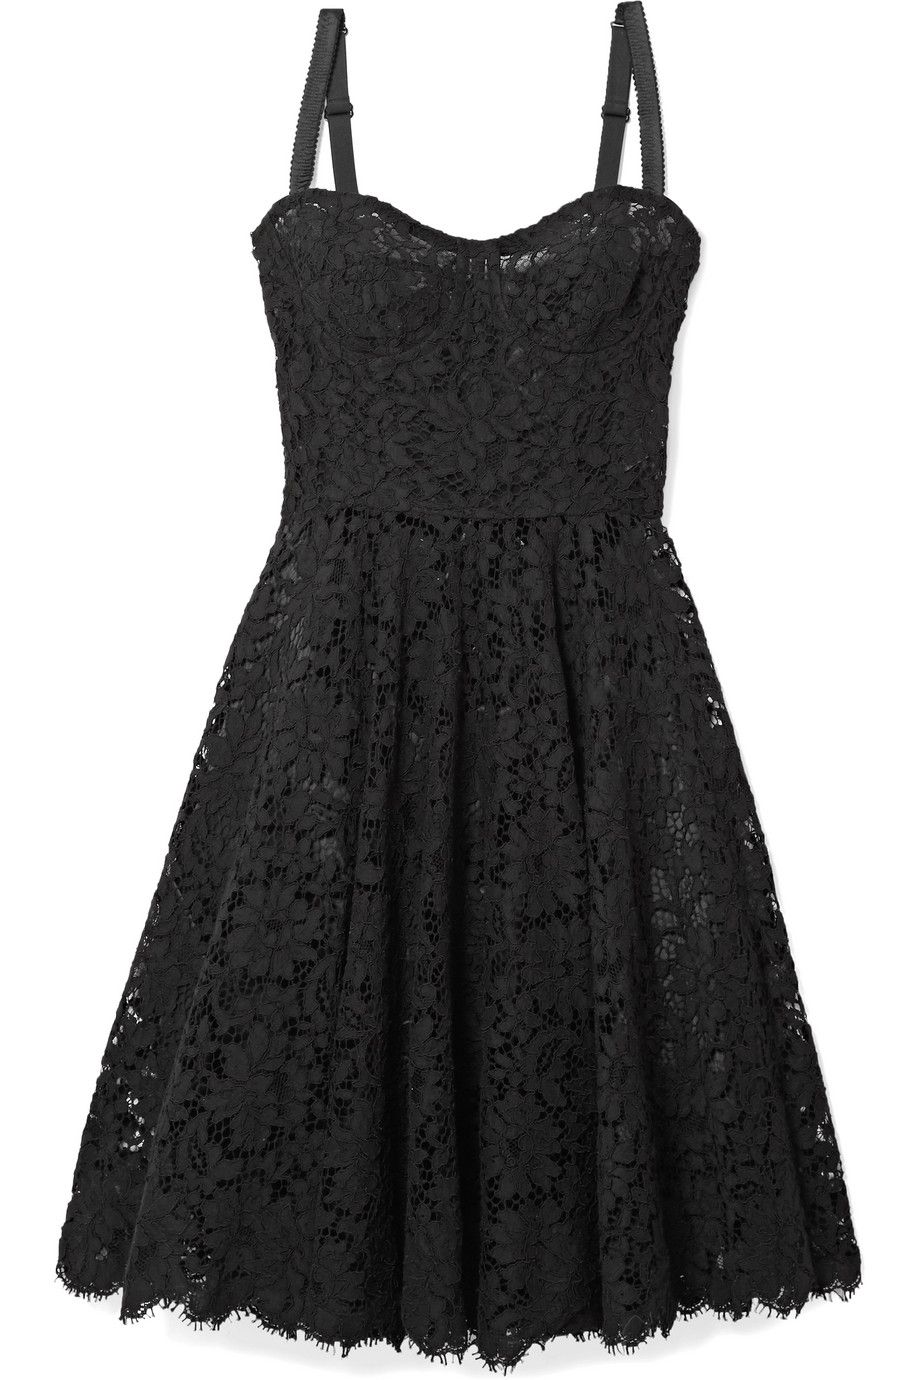 Clothing, Dress, Cocktail dress, Day dress, Black, Little black dress, One-piece garment, Lace, A-line, 